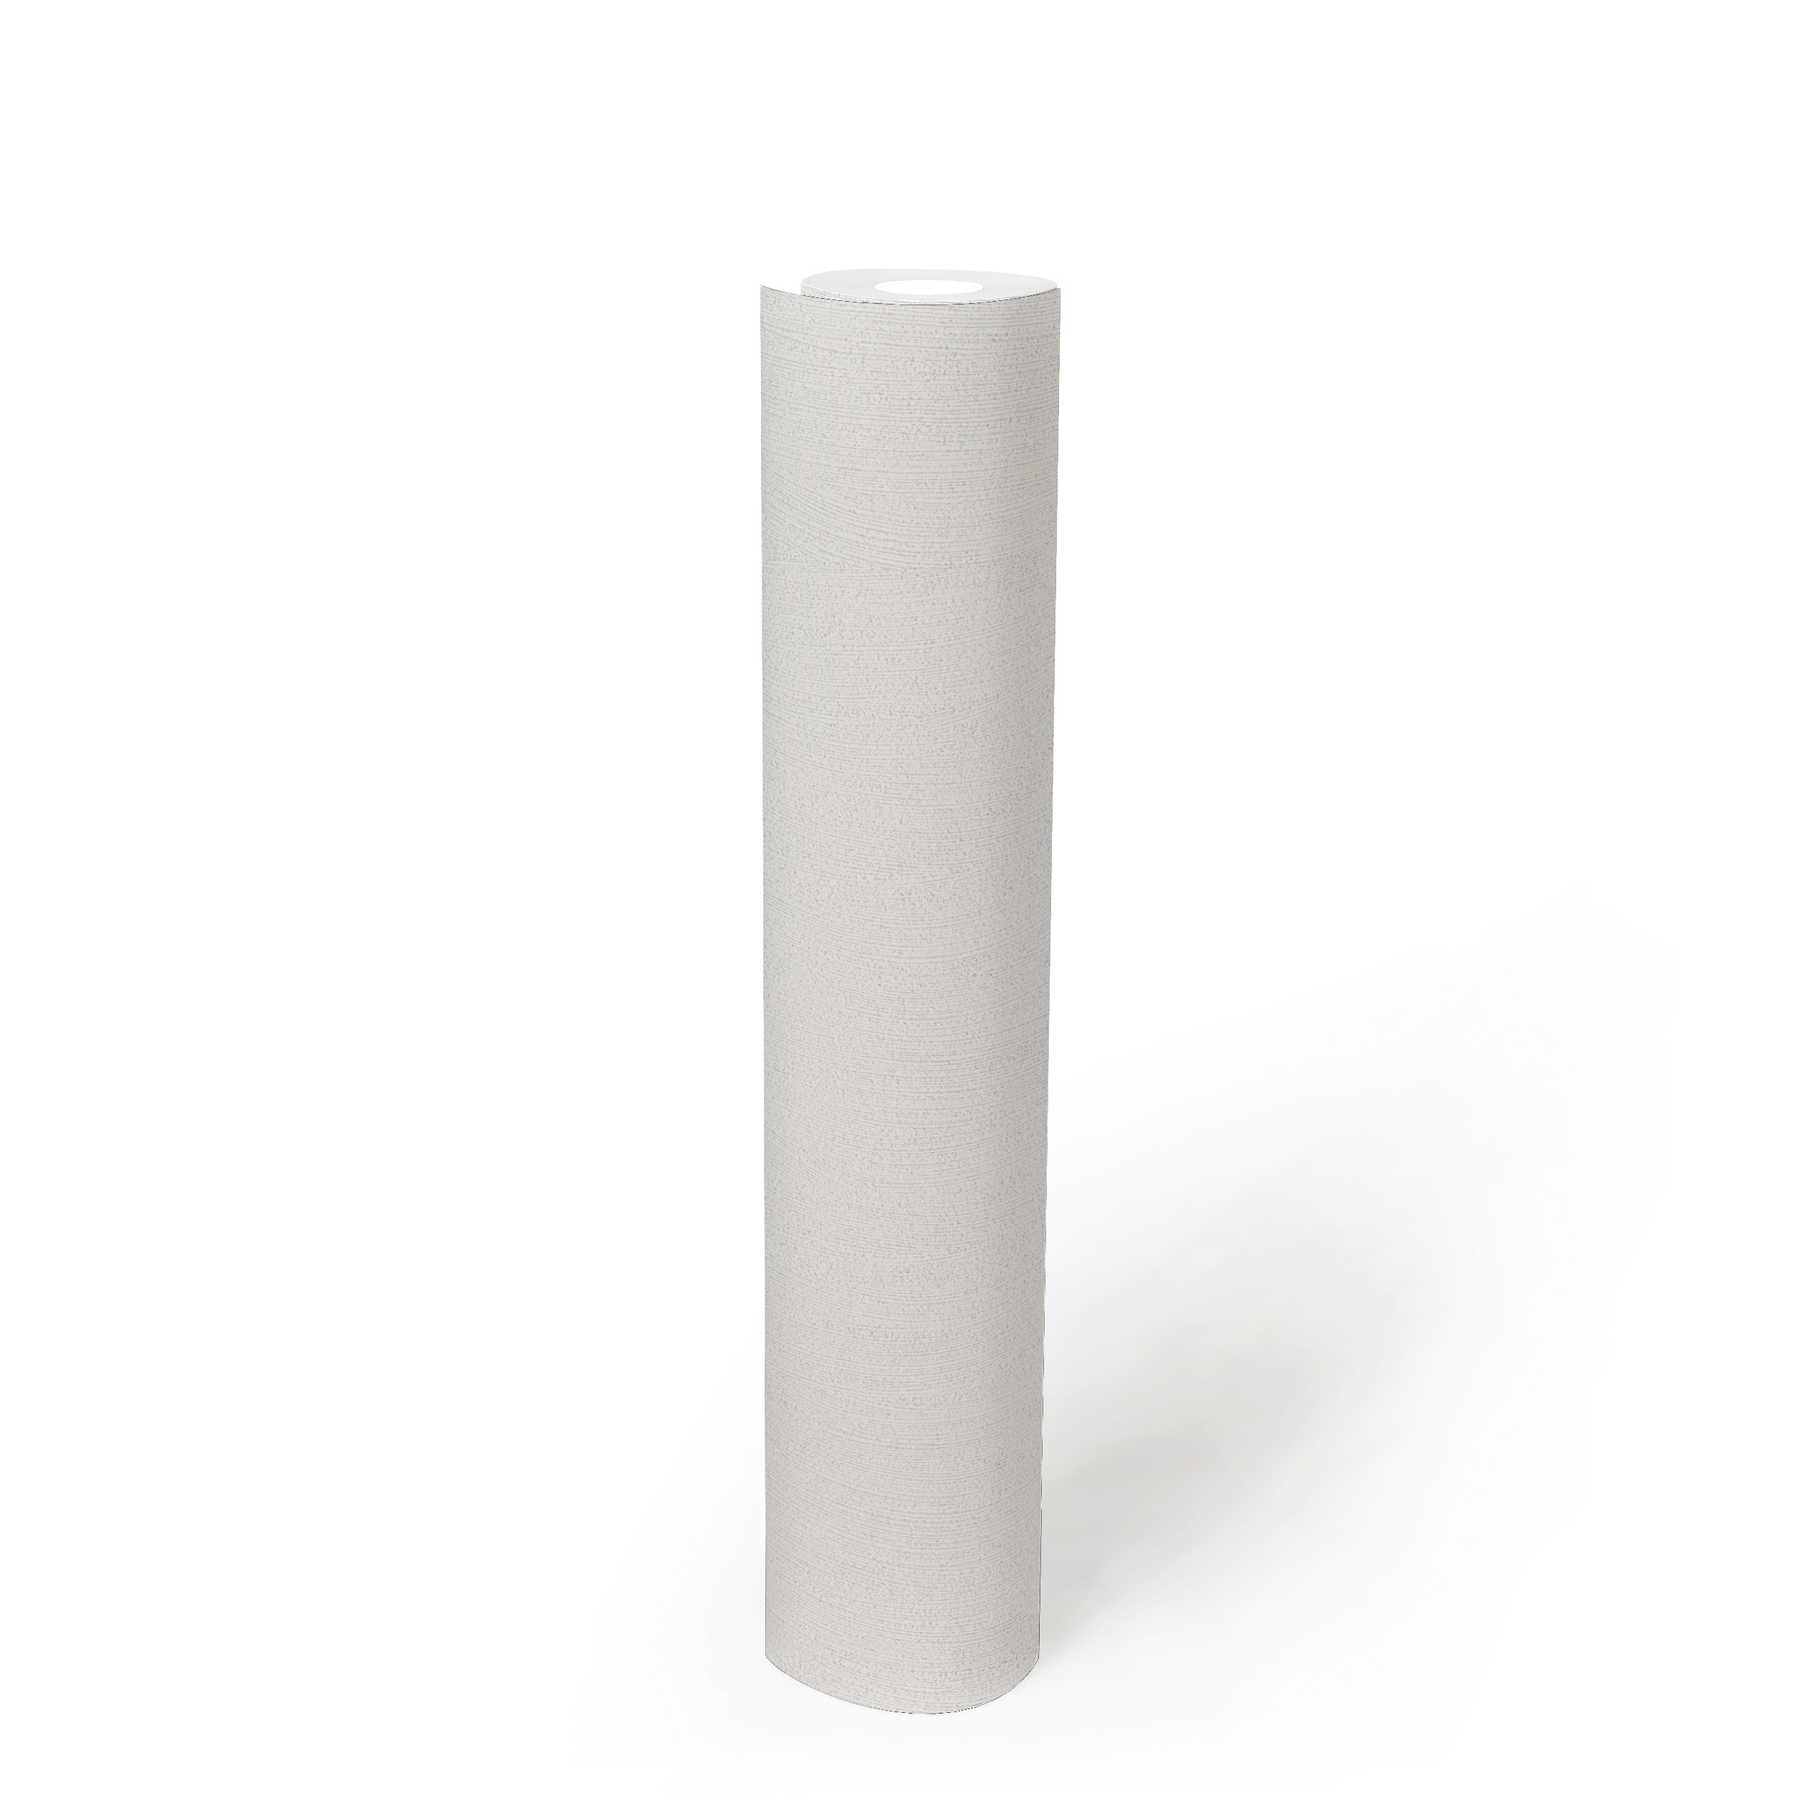             Verfbaar behangpapier met gestreepte gipslook - wit
        